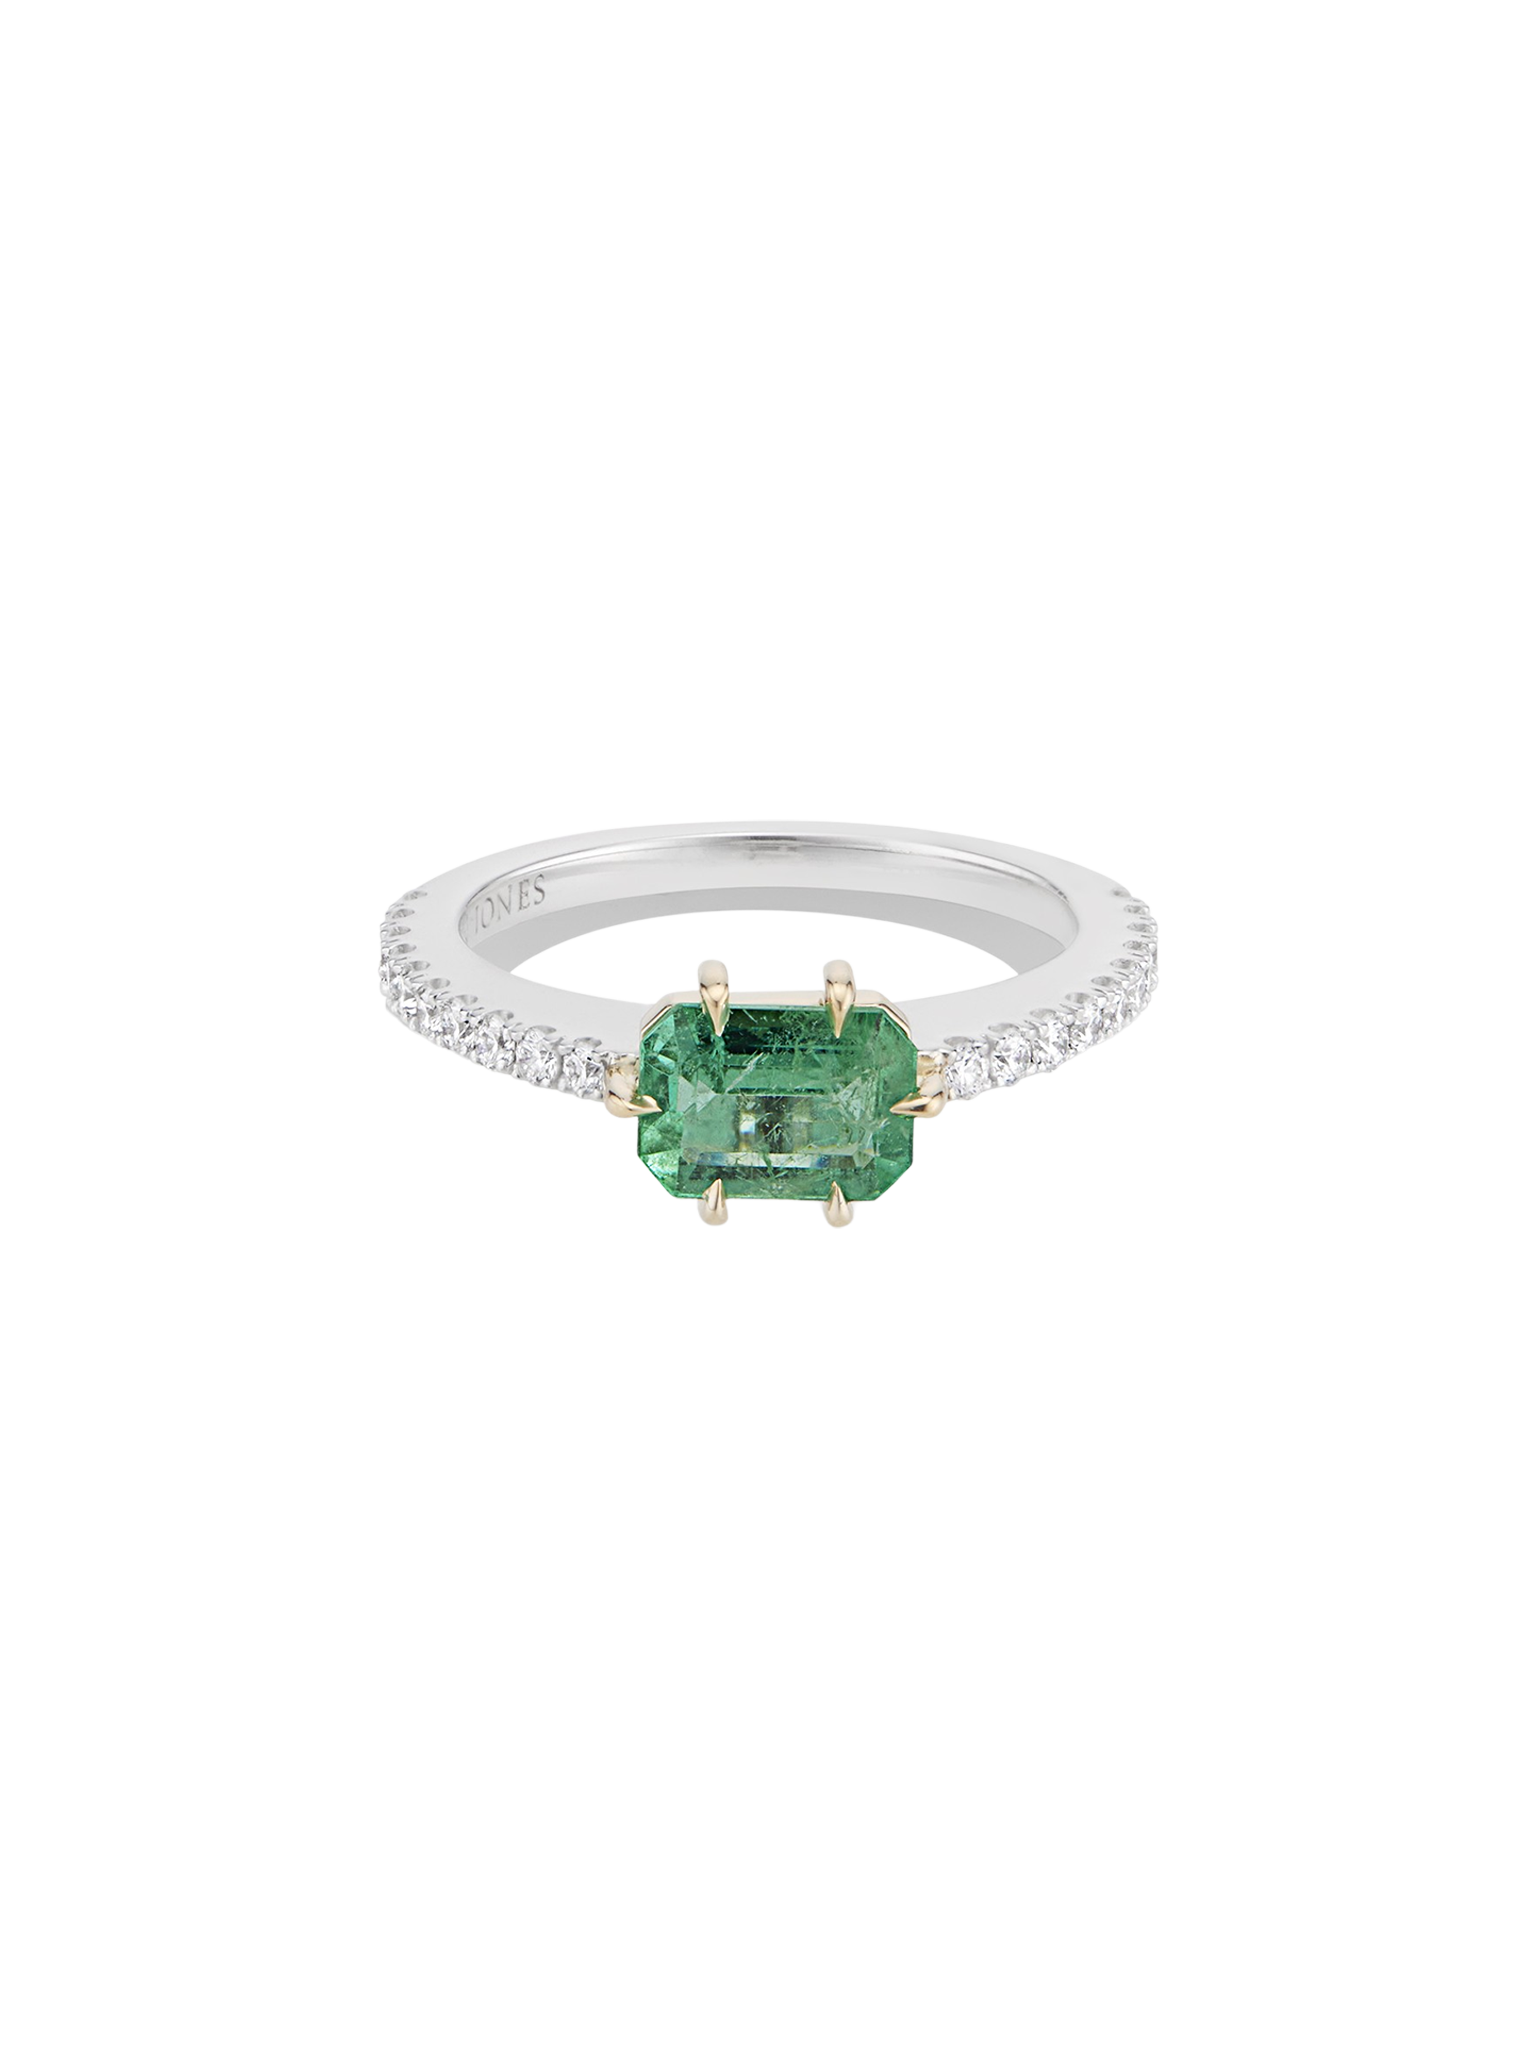 Emerald and diamond alternative engagement ring